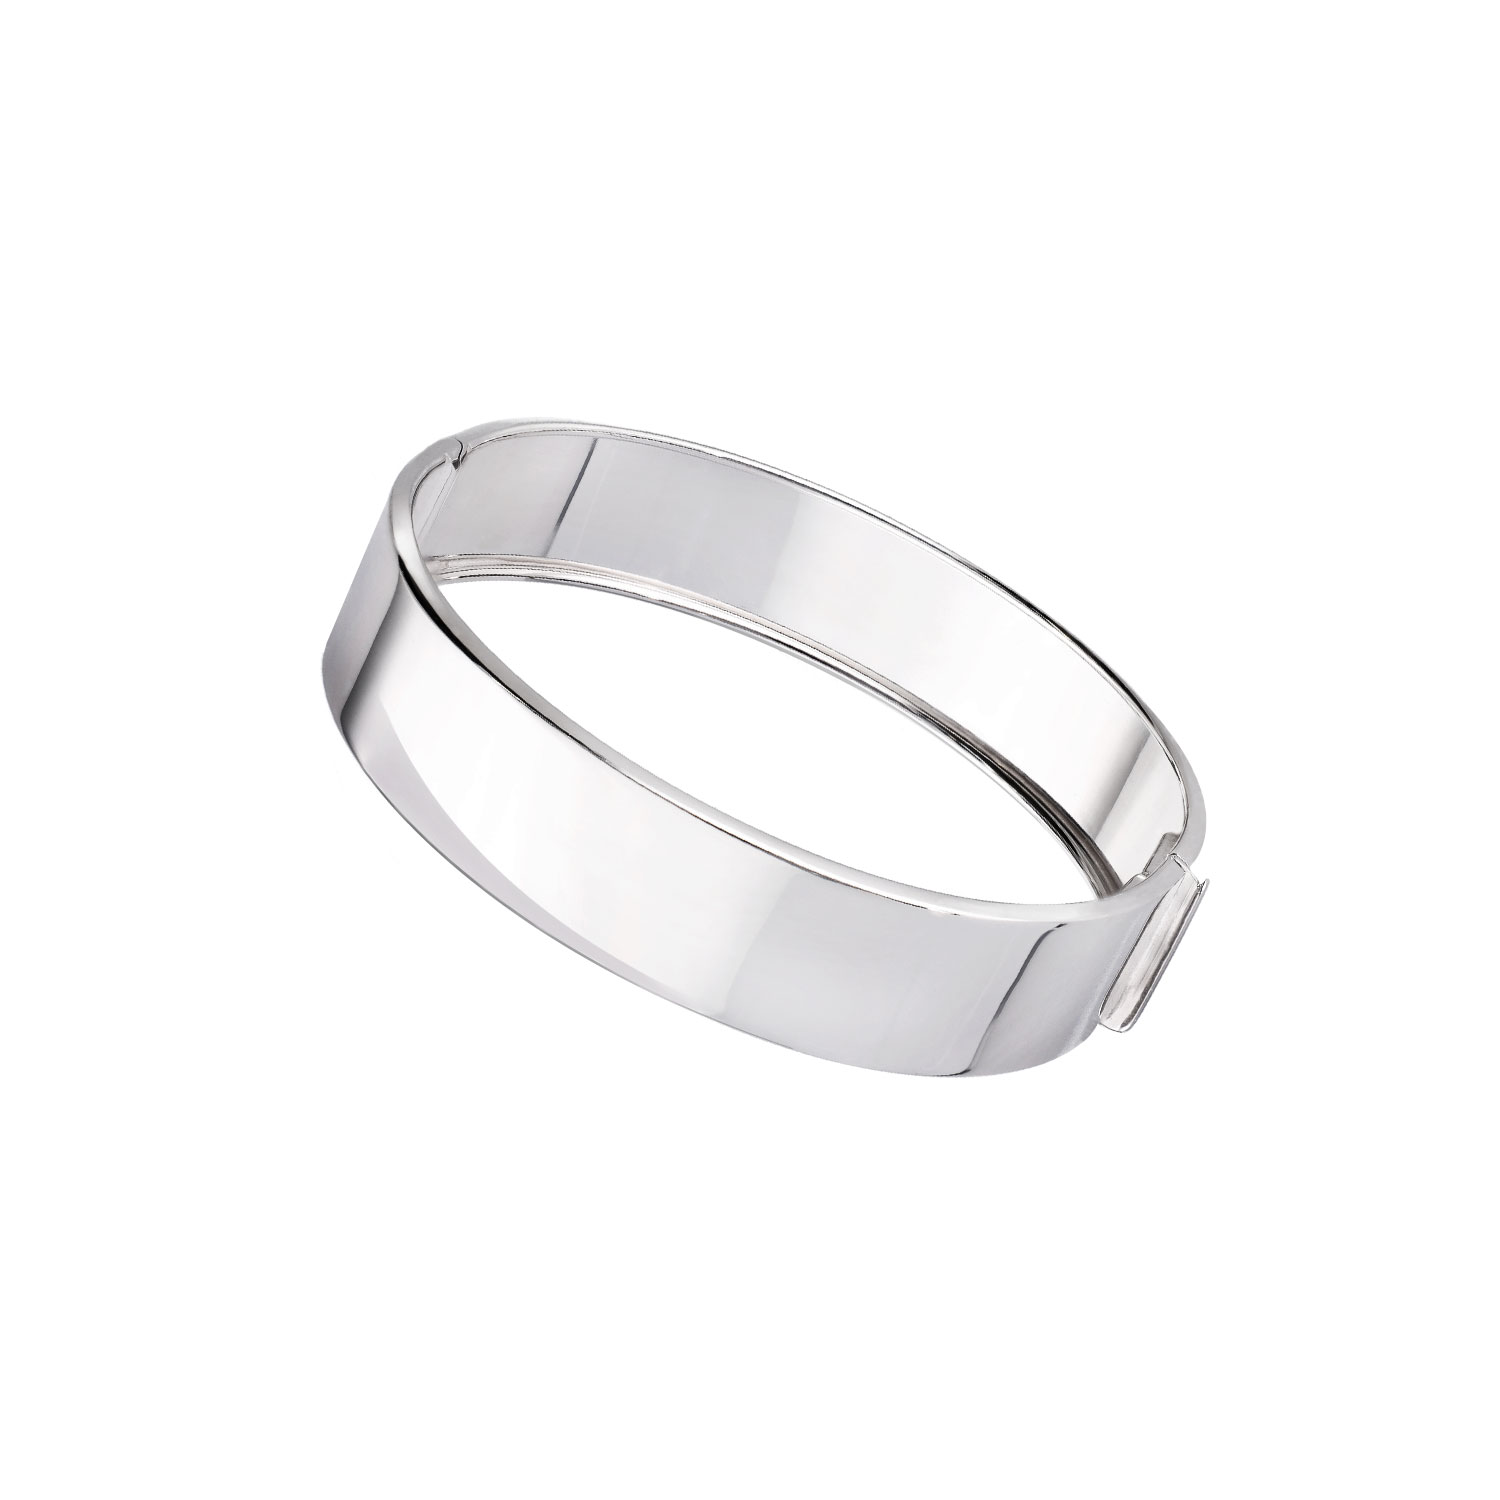 Tiffany & co rigid bracelet Notes™ I Love You in sterling silver